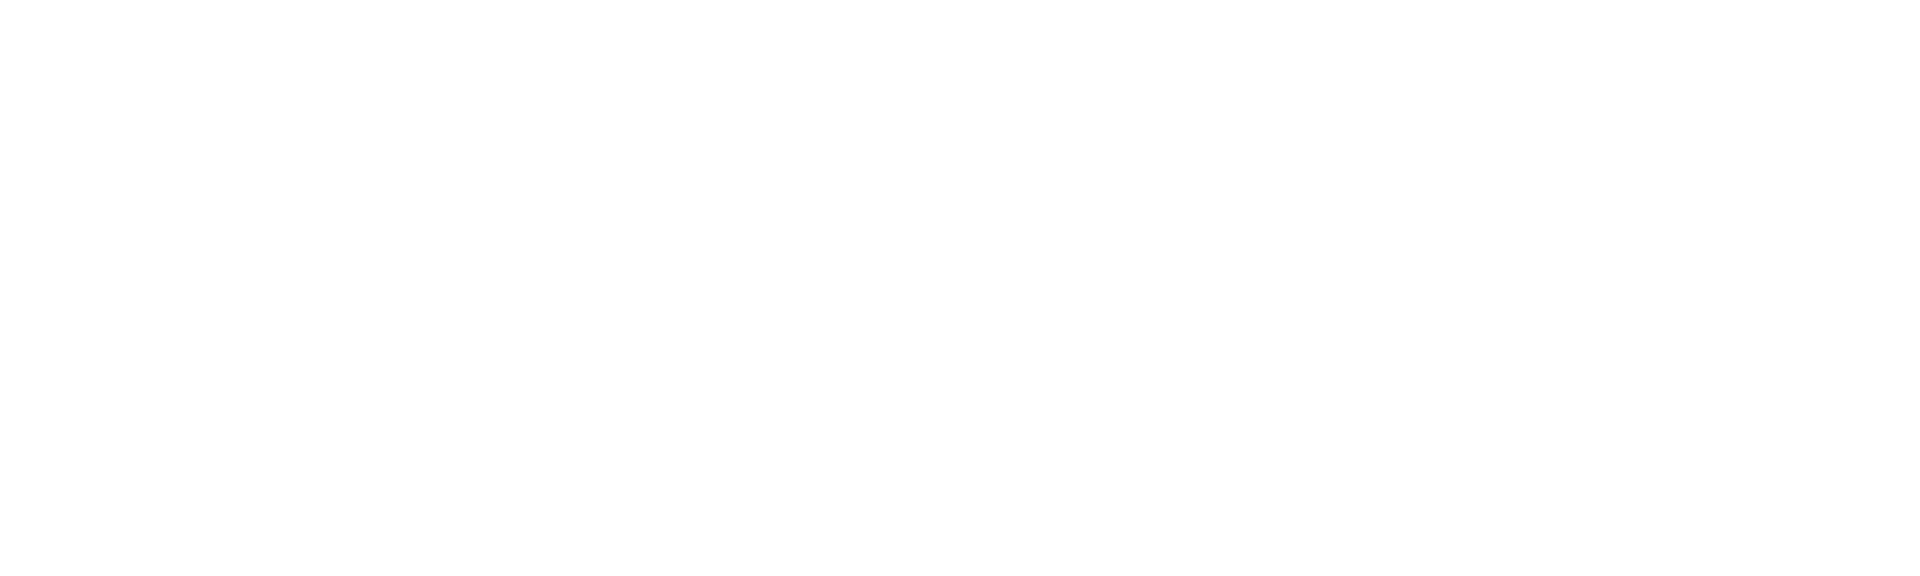 harwin plaza logo in white